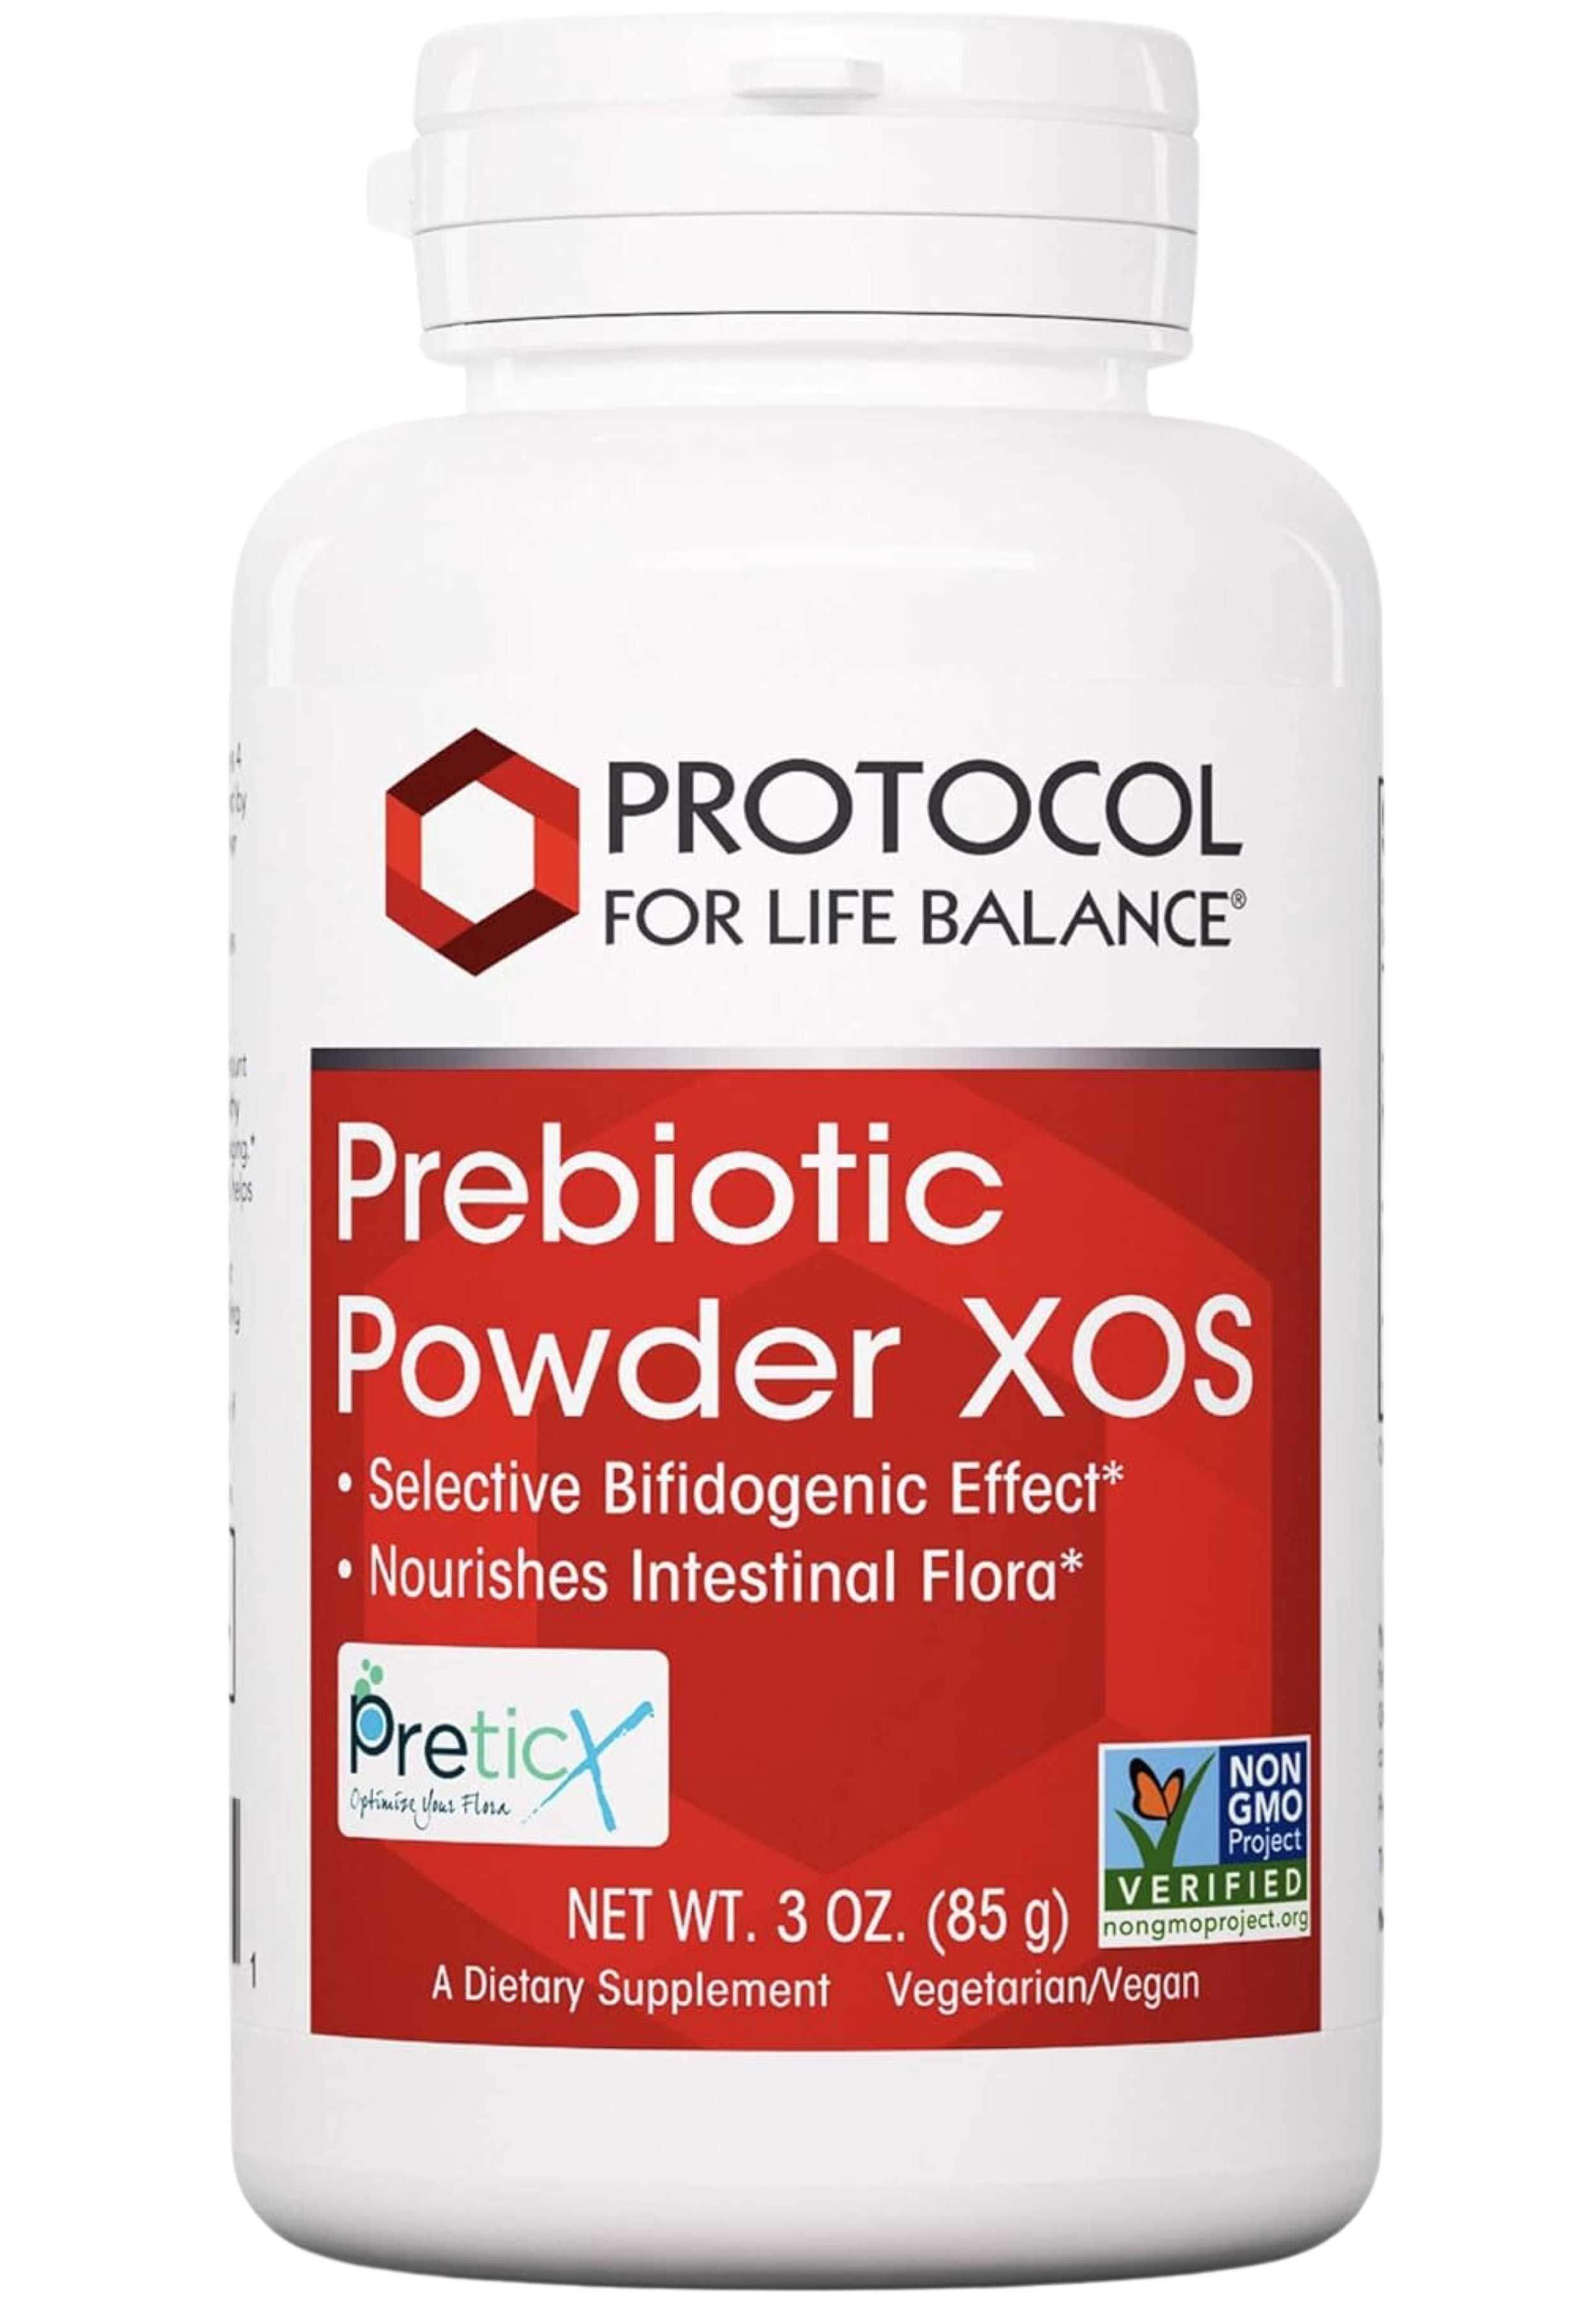 Protocol for Life Balance Prebiotic Powder XOS